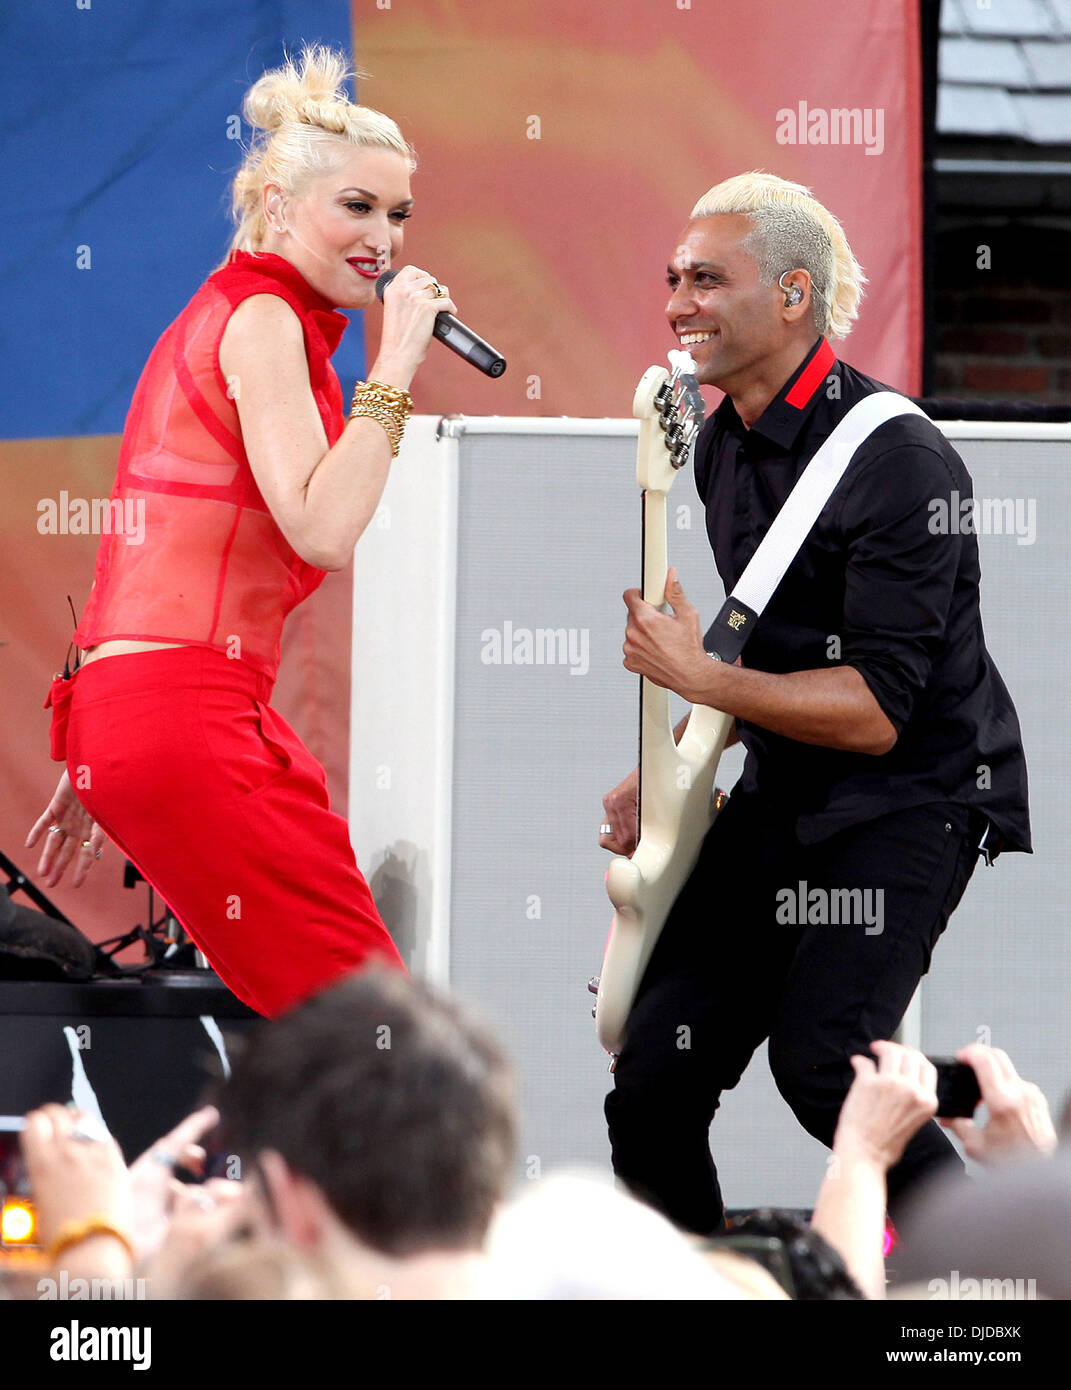 Gwen Stefani und Tony Kanal No Doubt tritt im Central Park im Rahmen von  Good Morning America Summer Concert Series New York City, USA - 27.07.12  Stockfotografie - Alamy